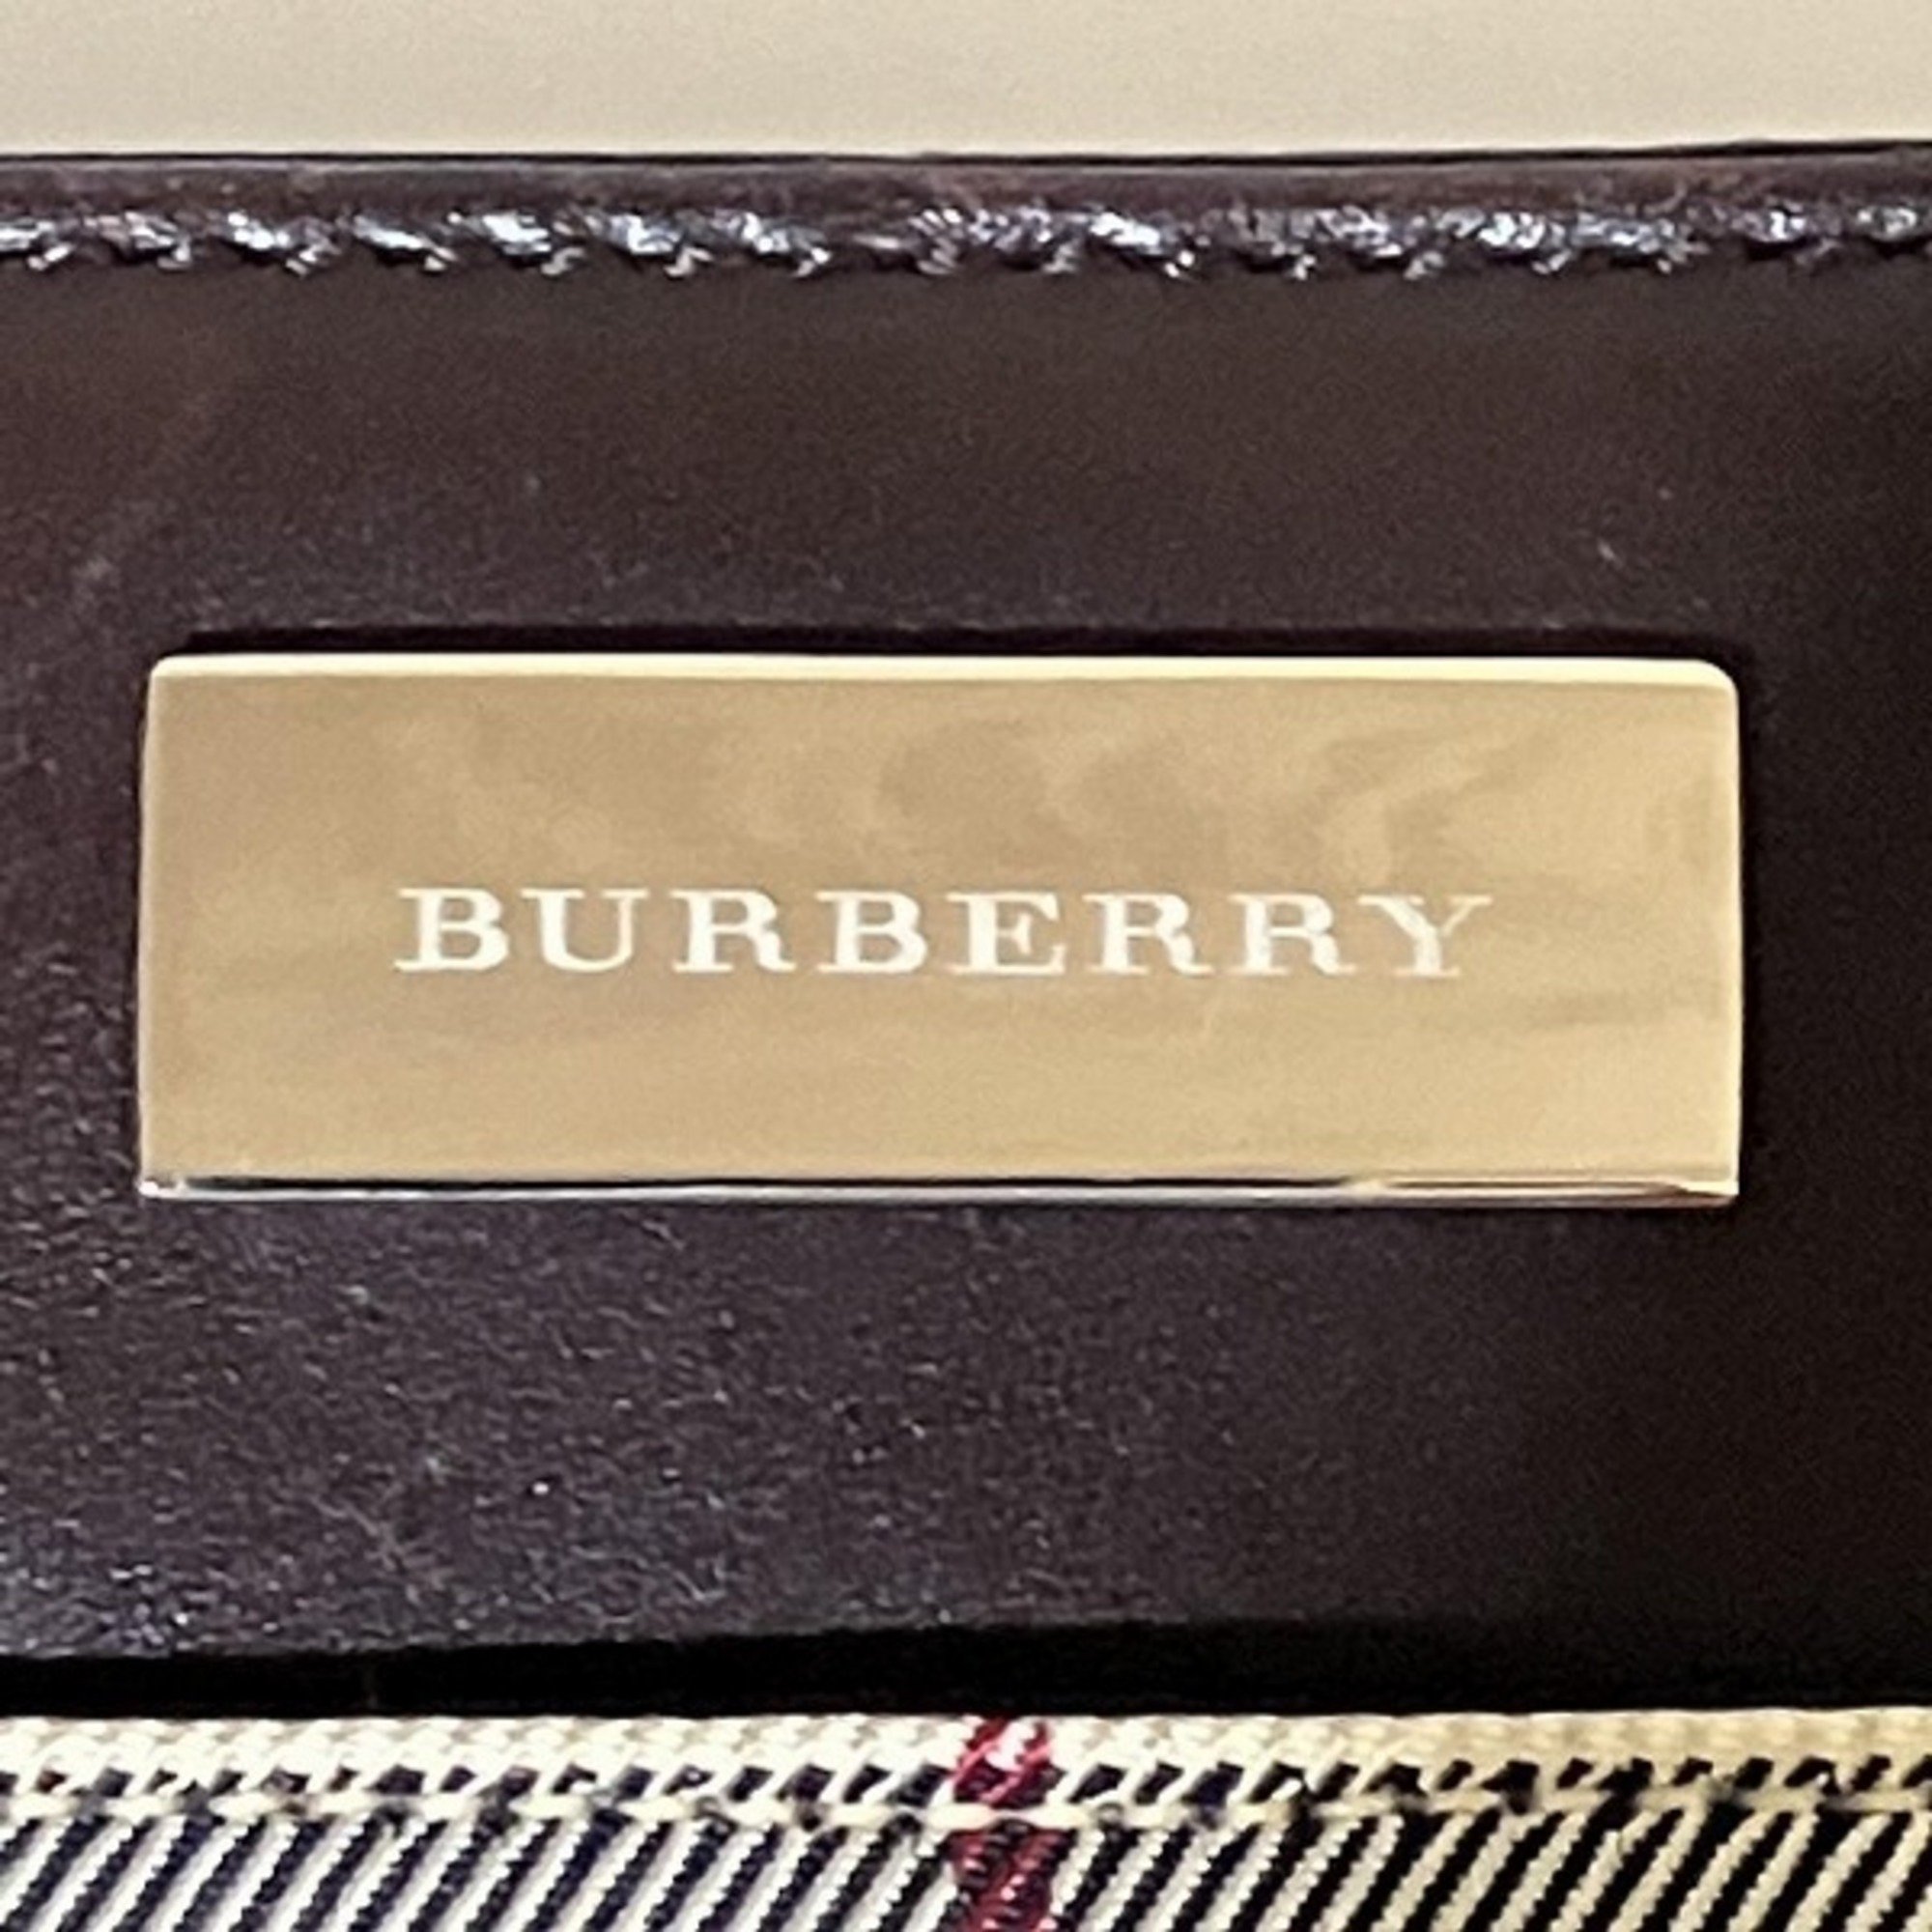 Burberry Nova Check Bag Tote Handbag Ladies